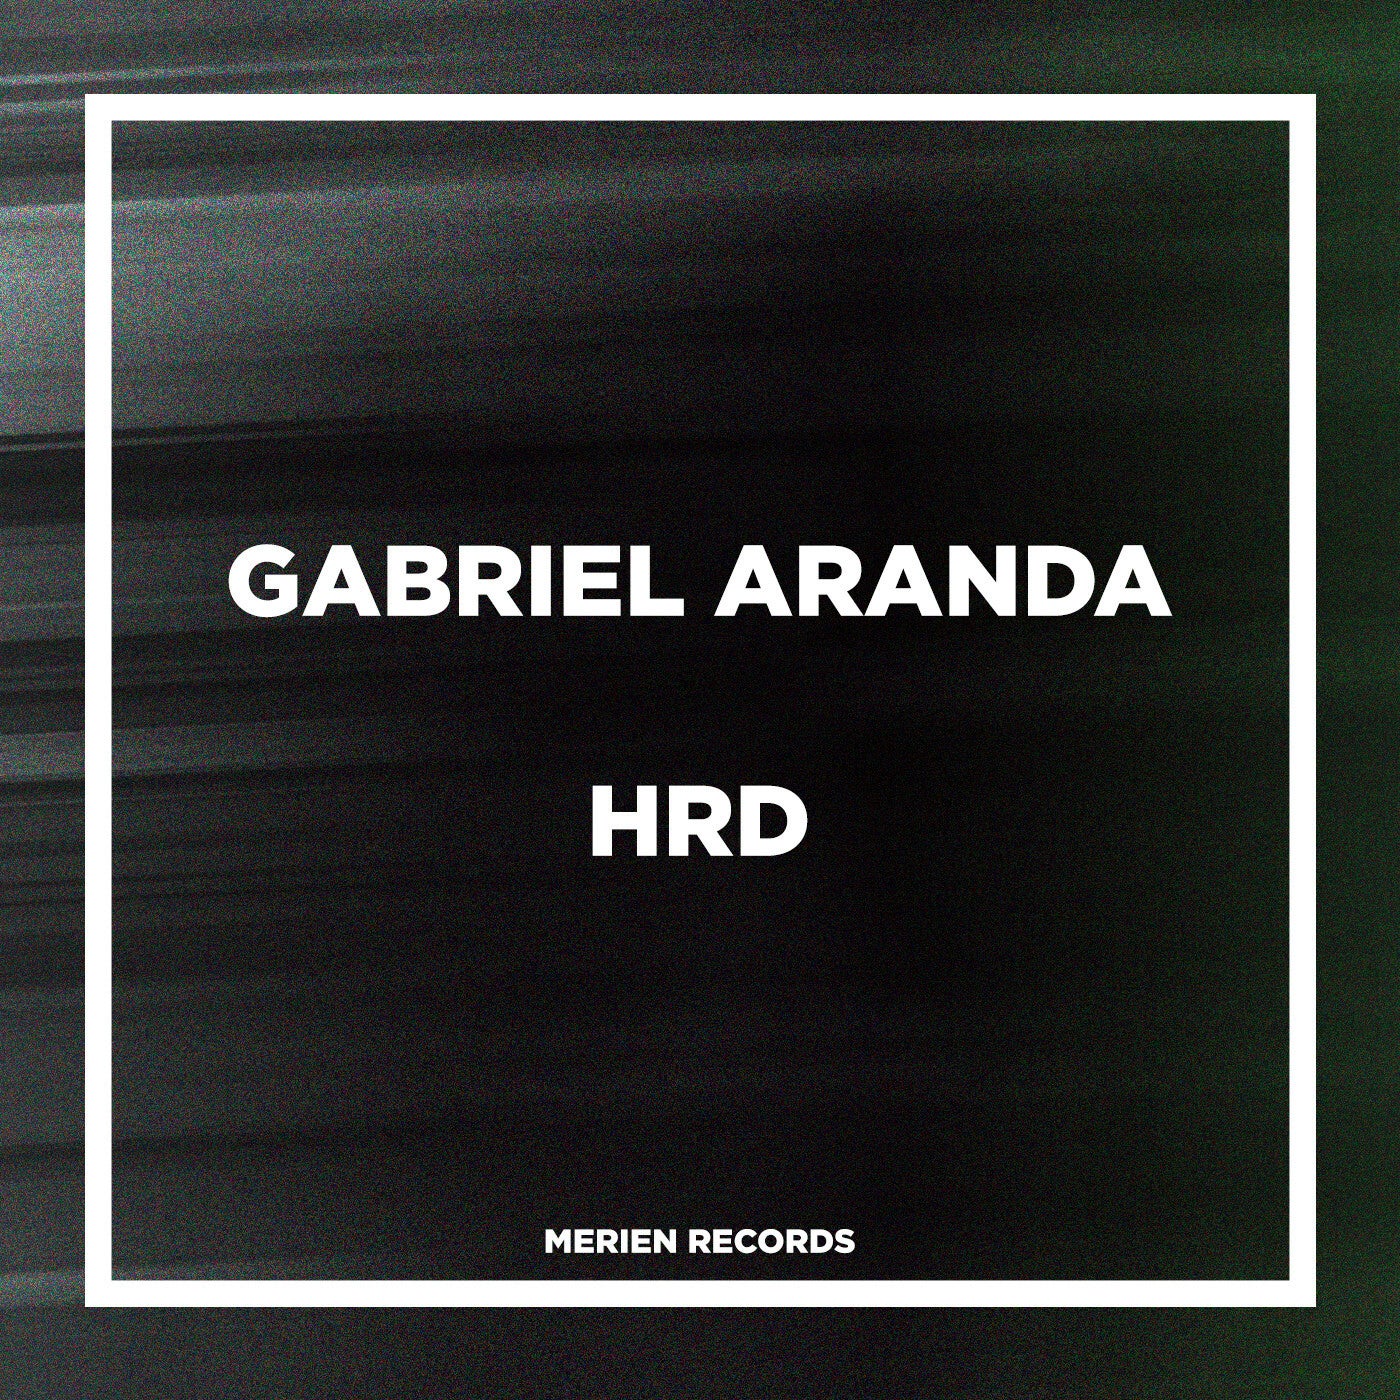 image cover: Gabriel Aranda - HRD on Merien Records